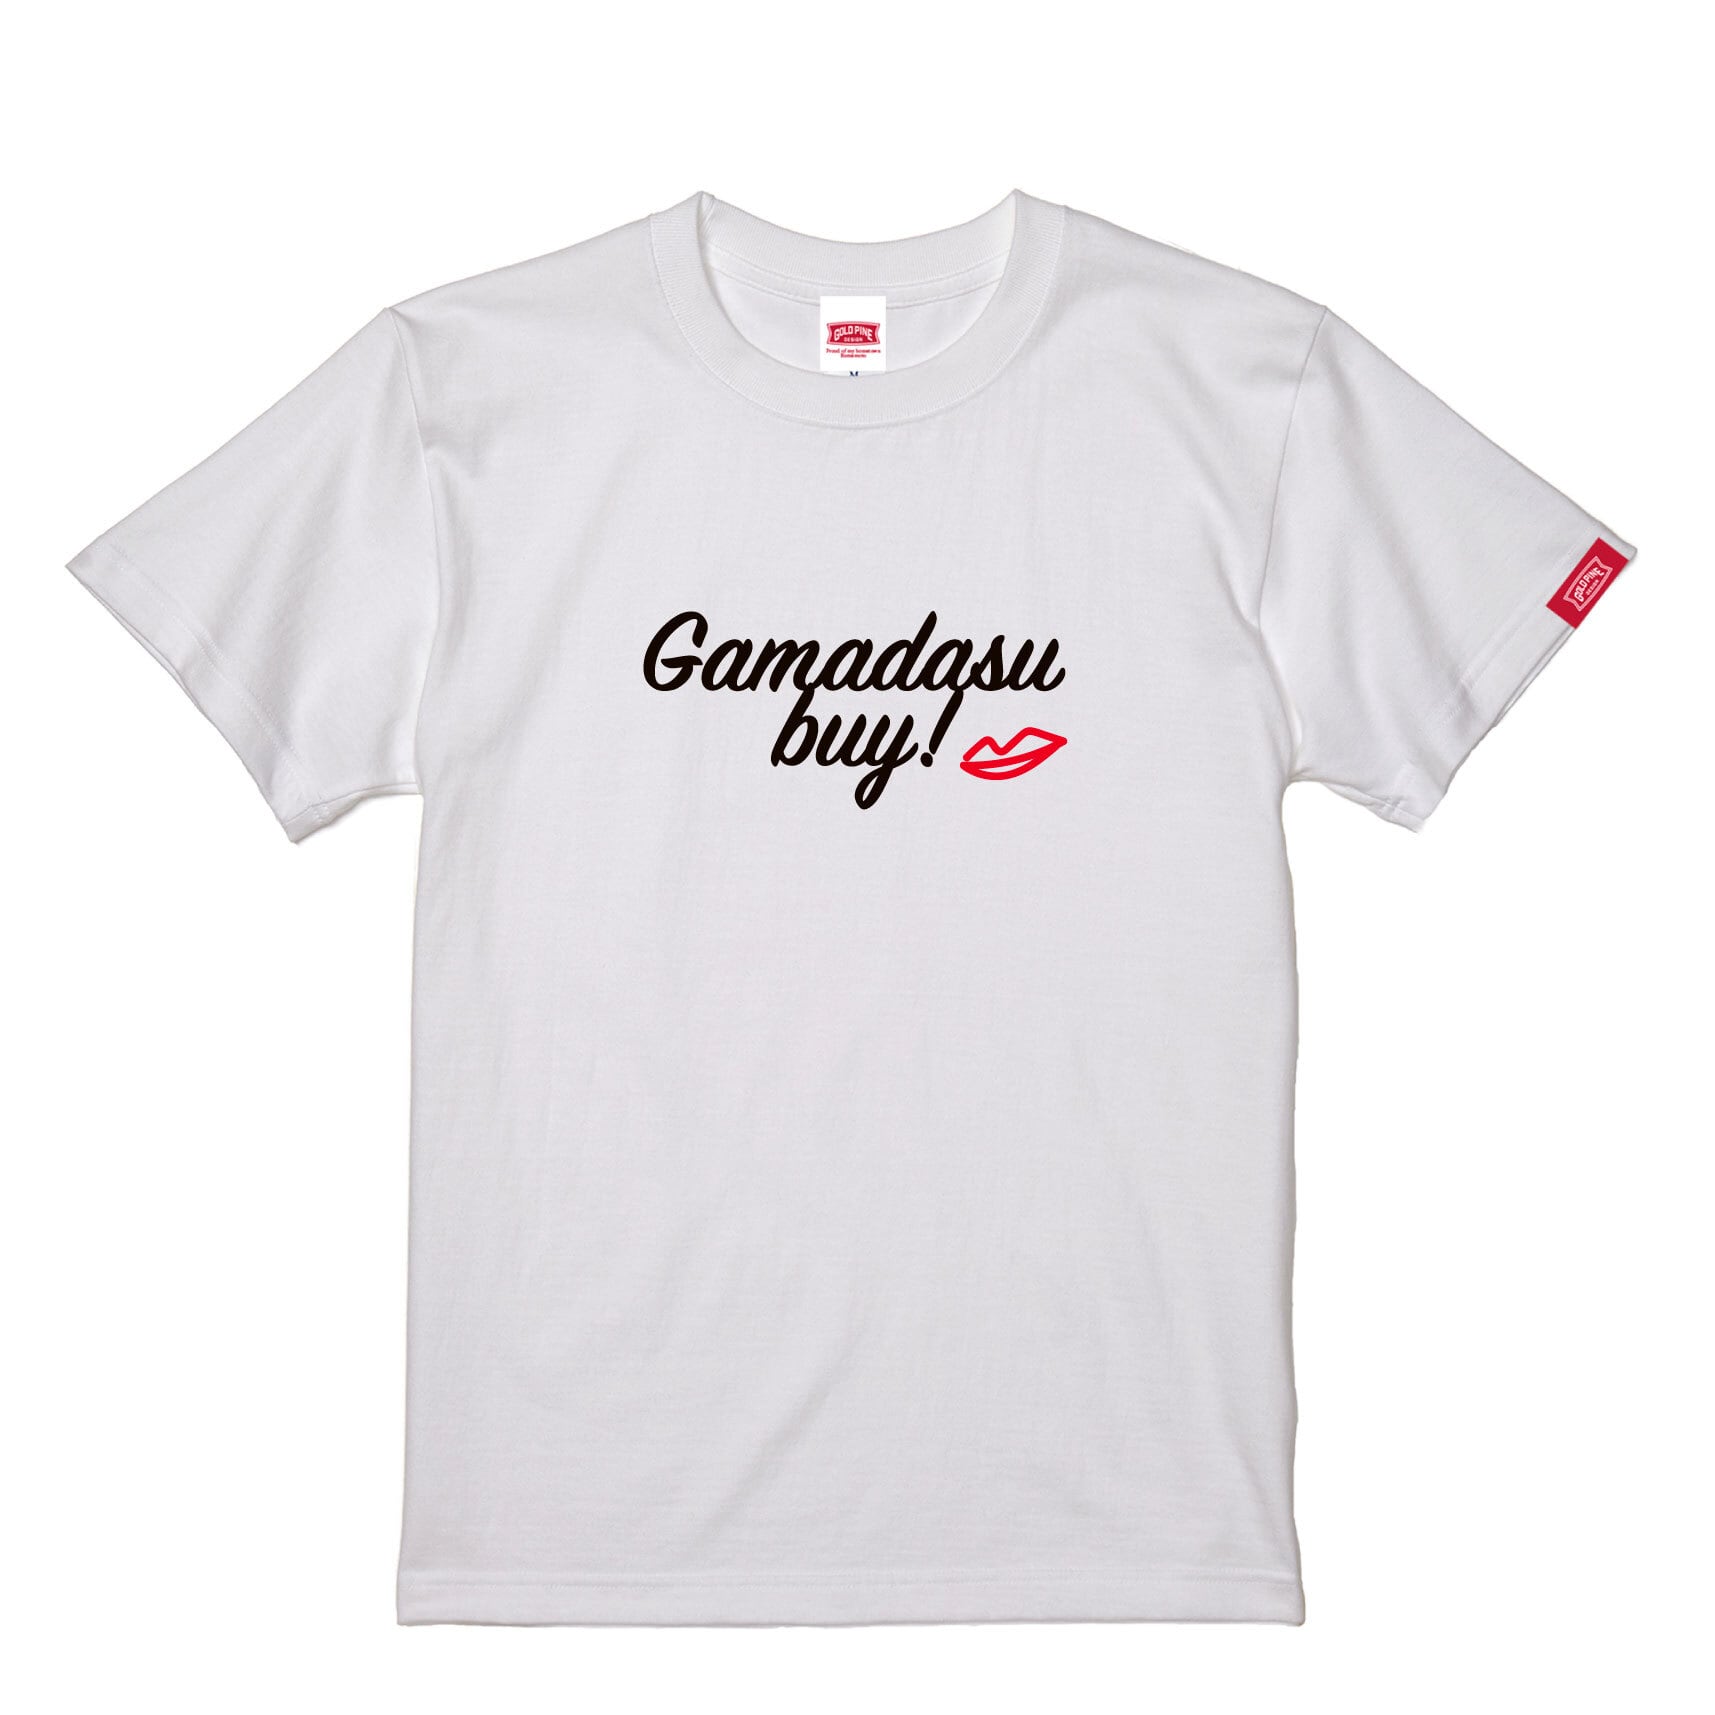 GAMADASBUYⅢ-Tshirt【Adult】White